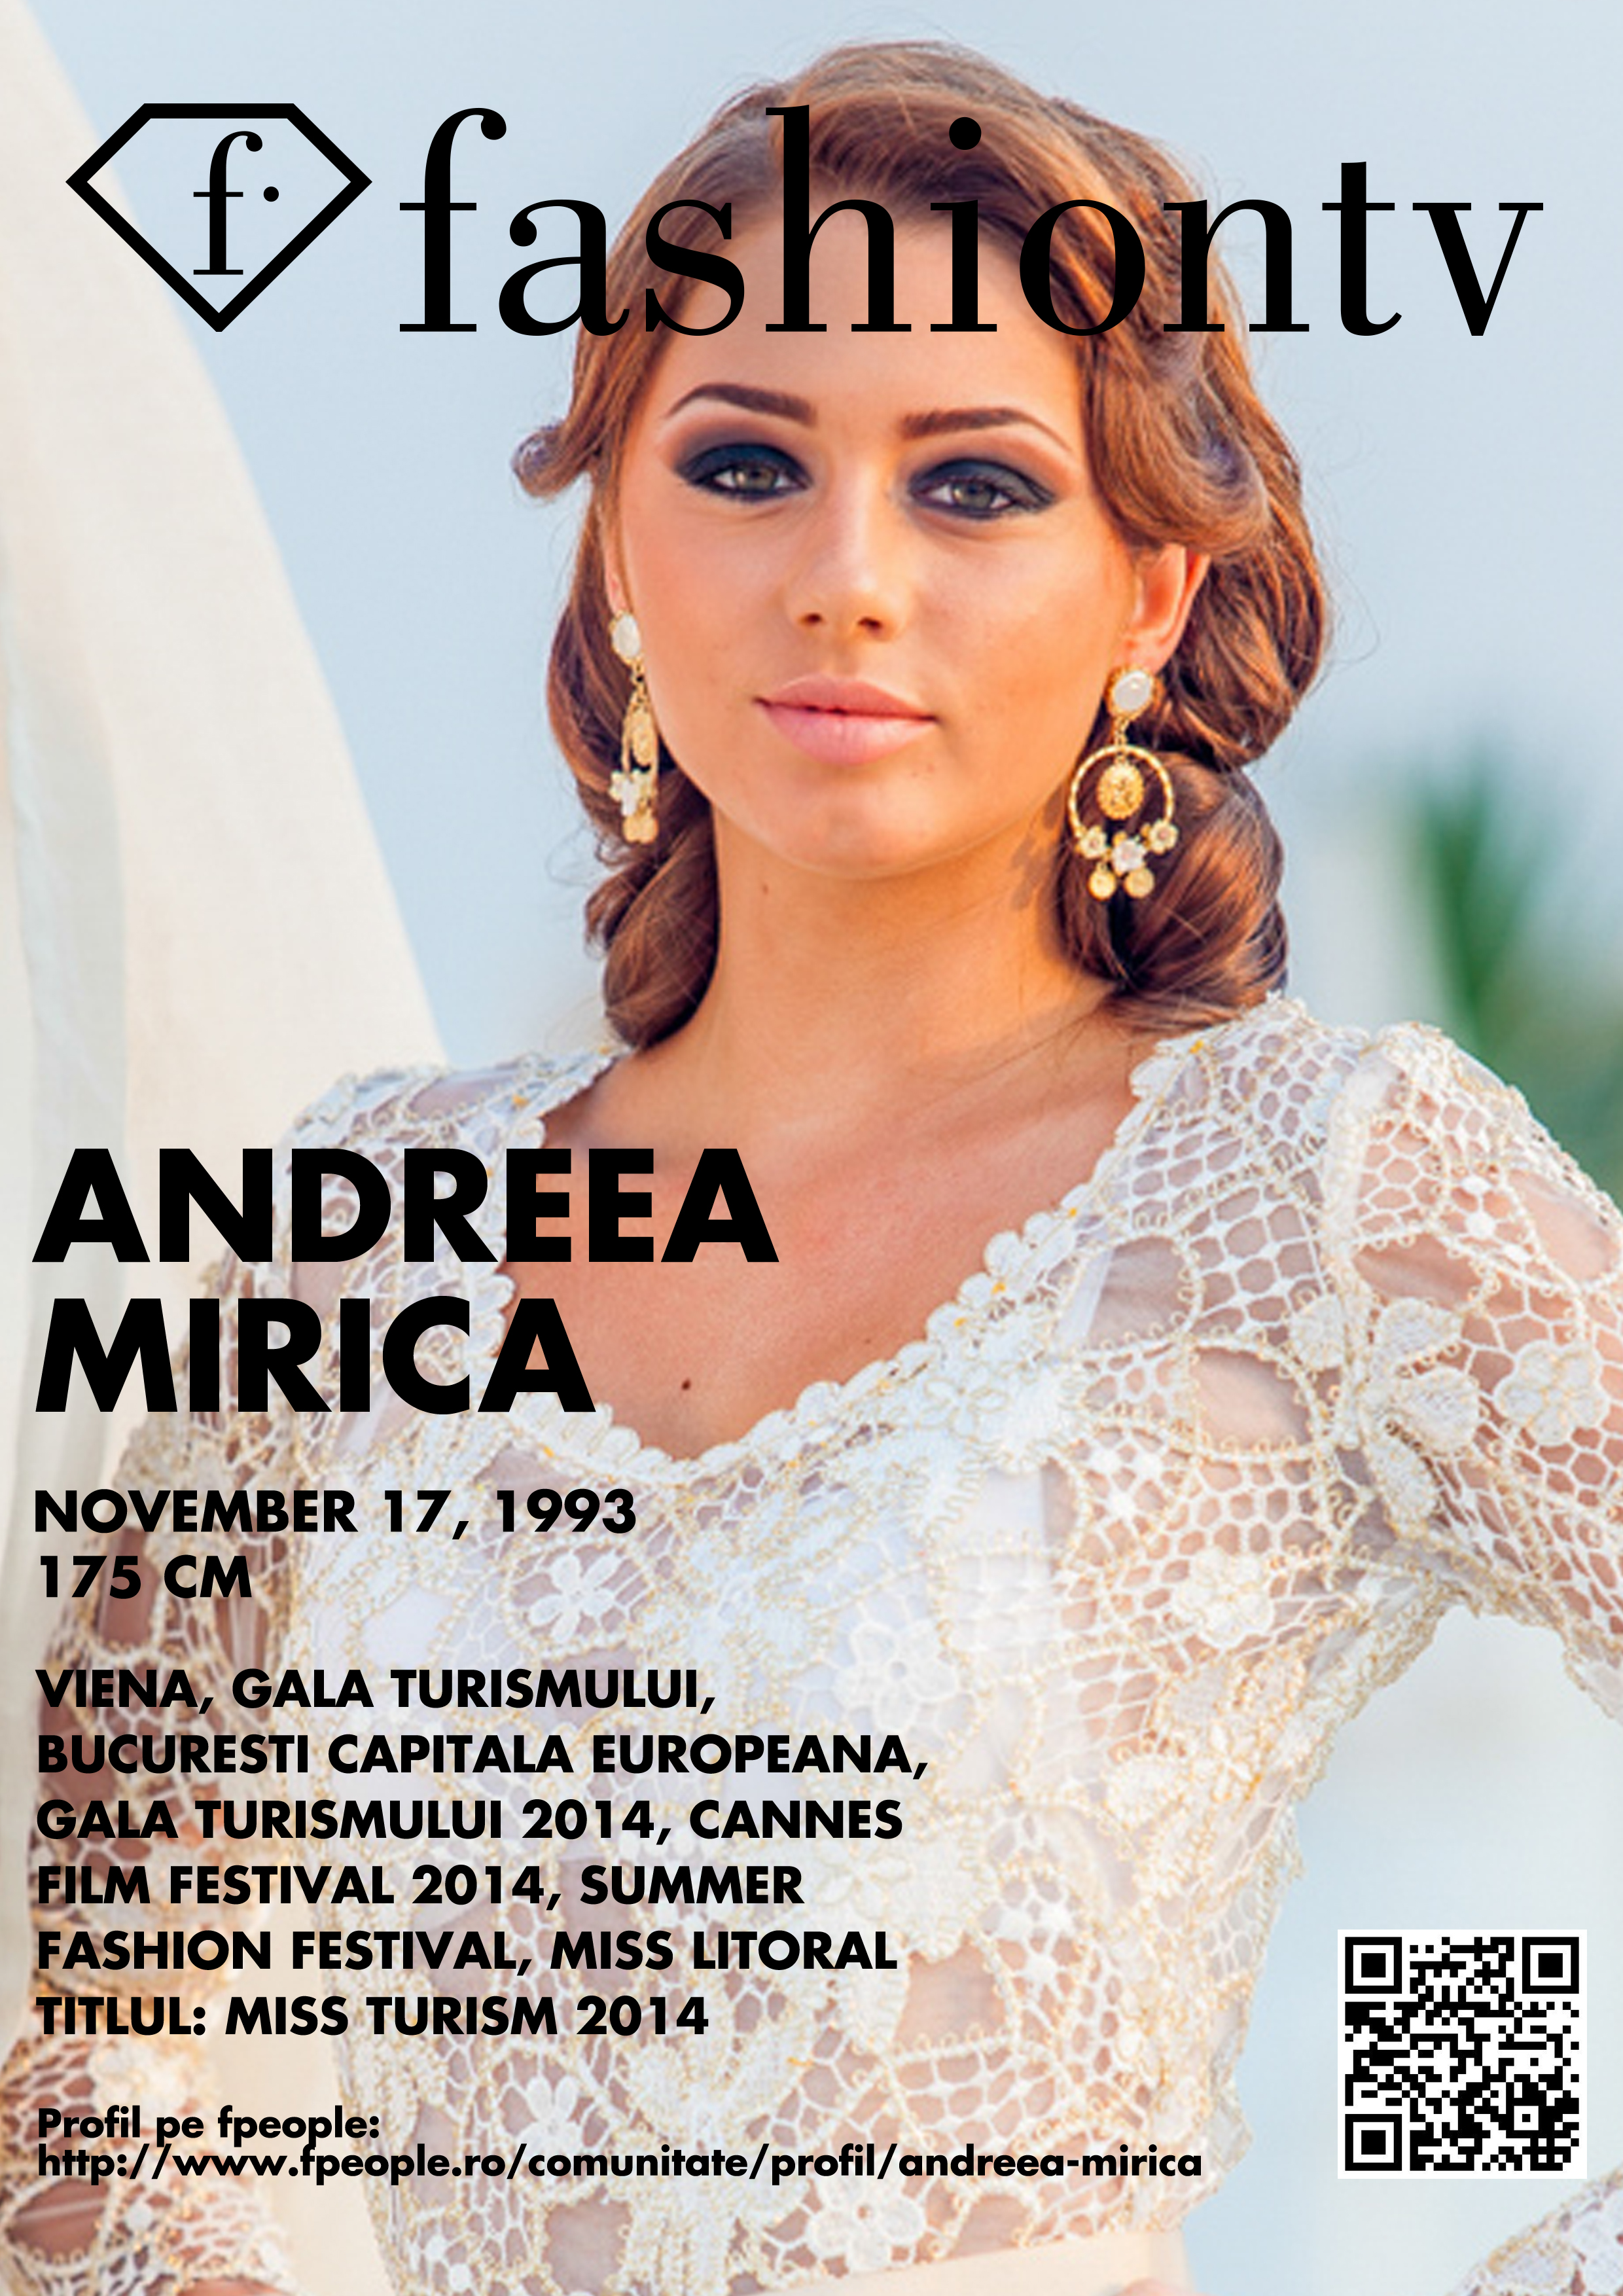 Andreea-Mirica